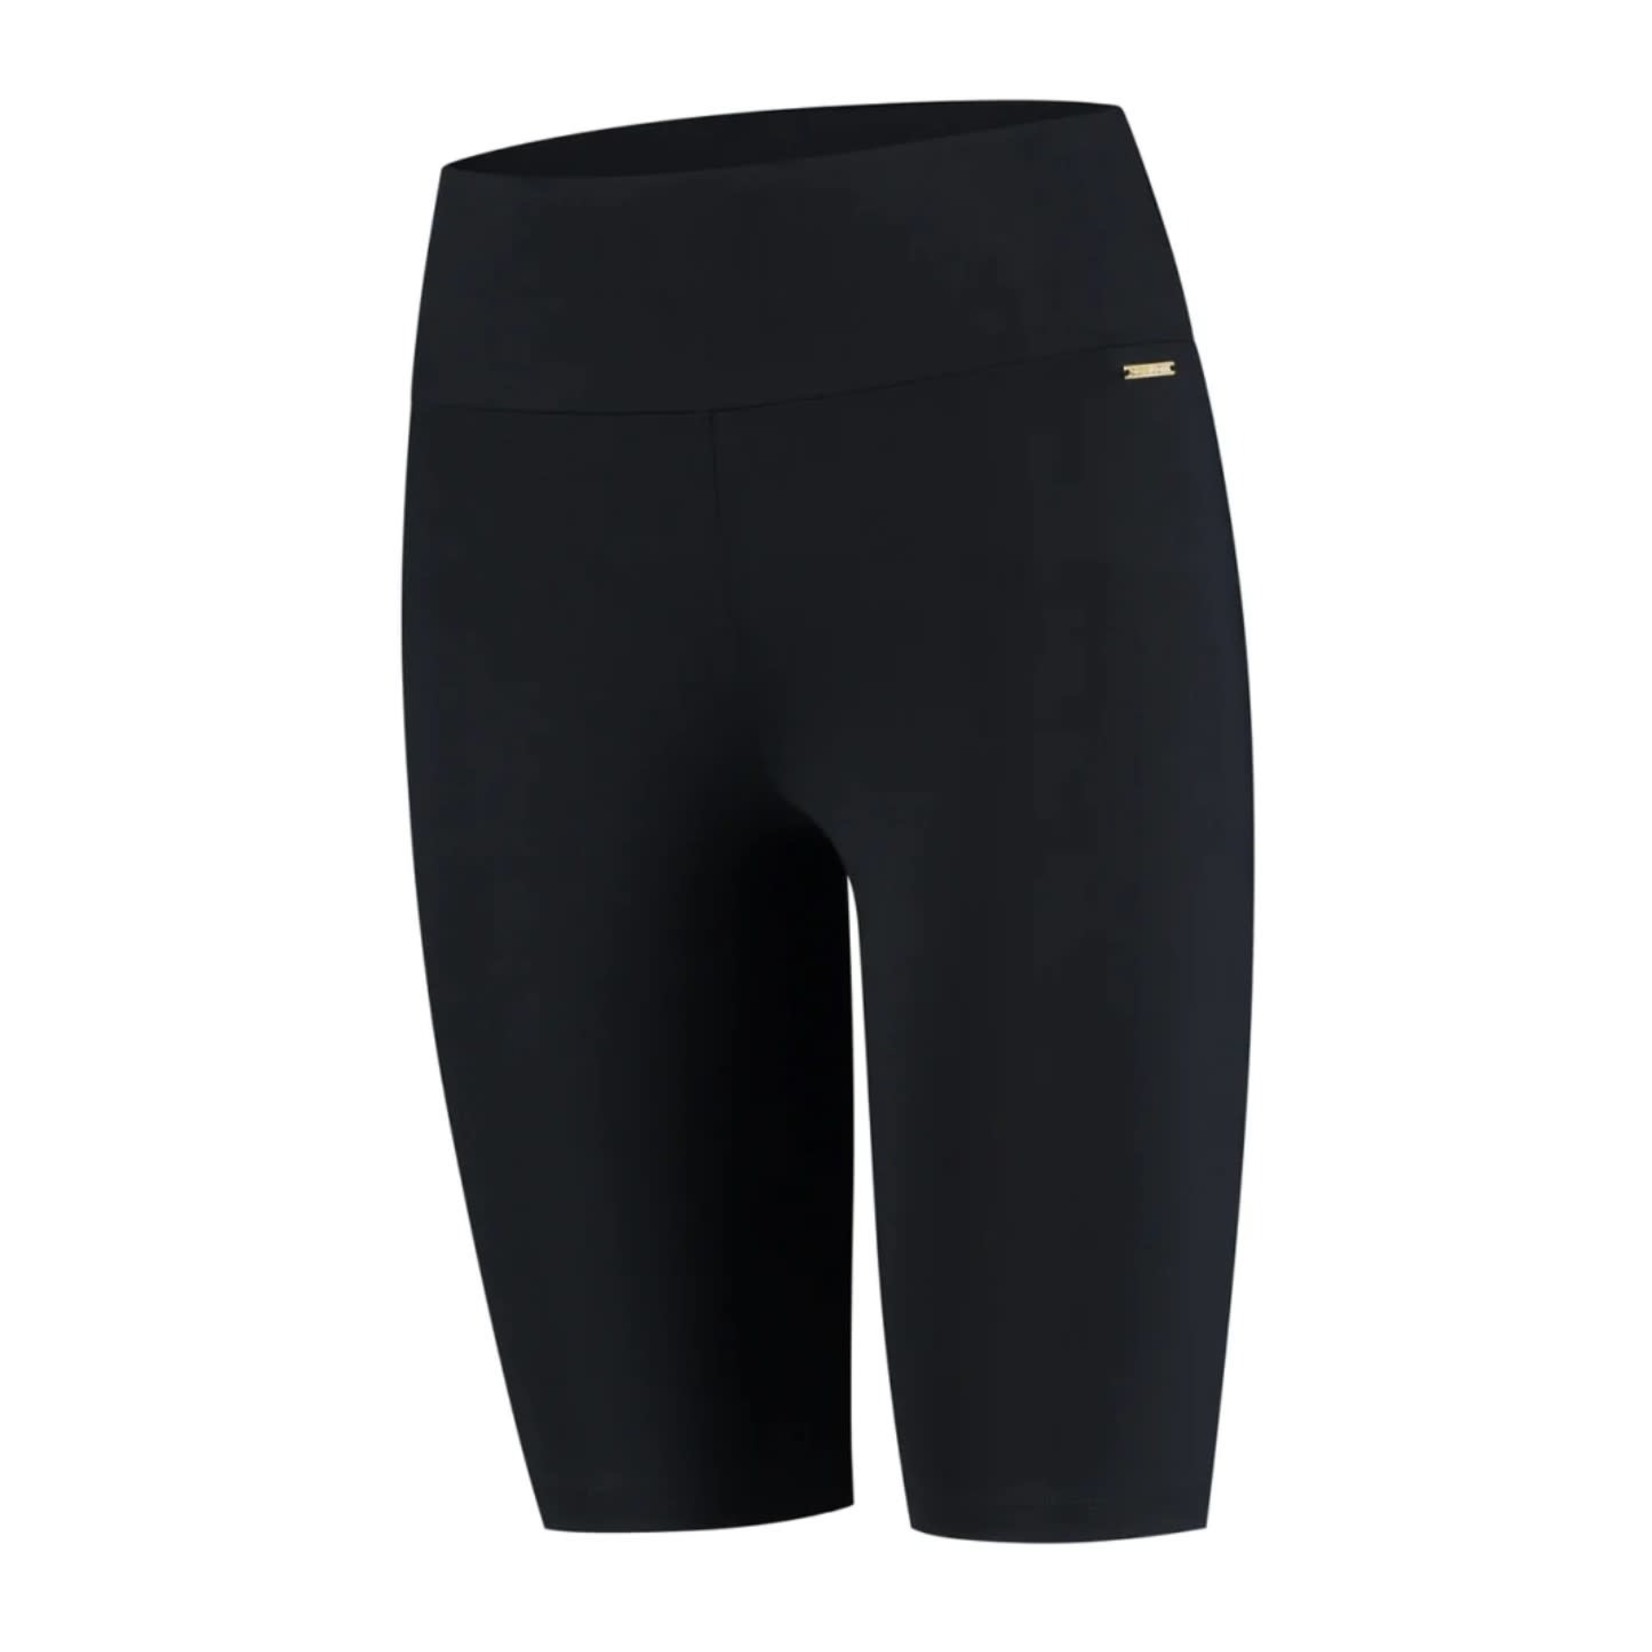 Deblon Sports Deblon - Classic Shorts - Black